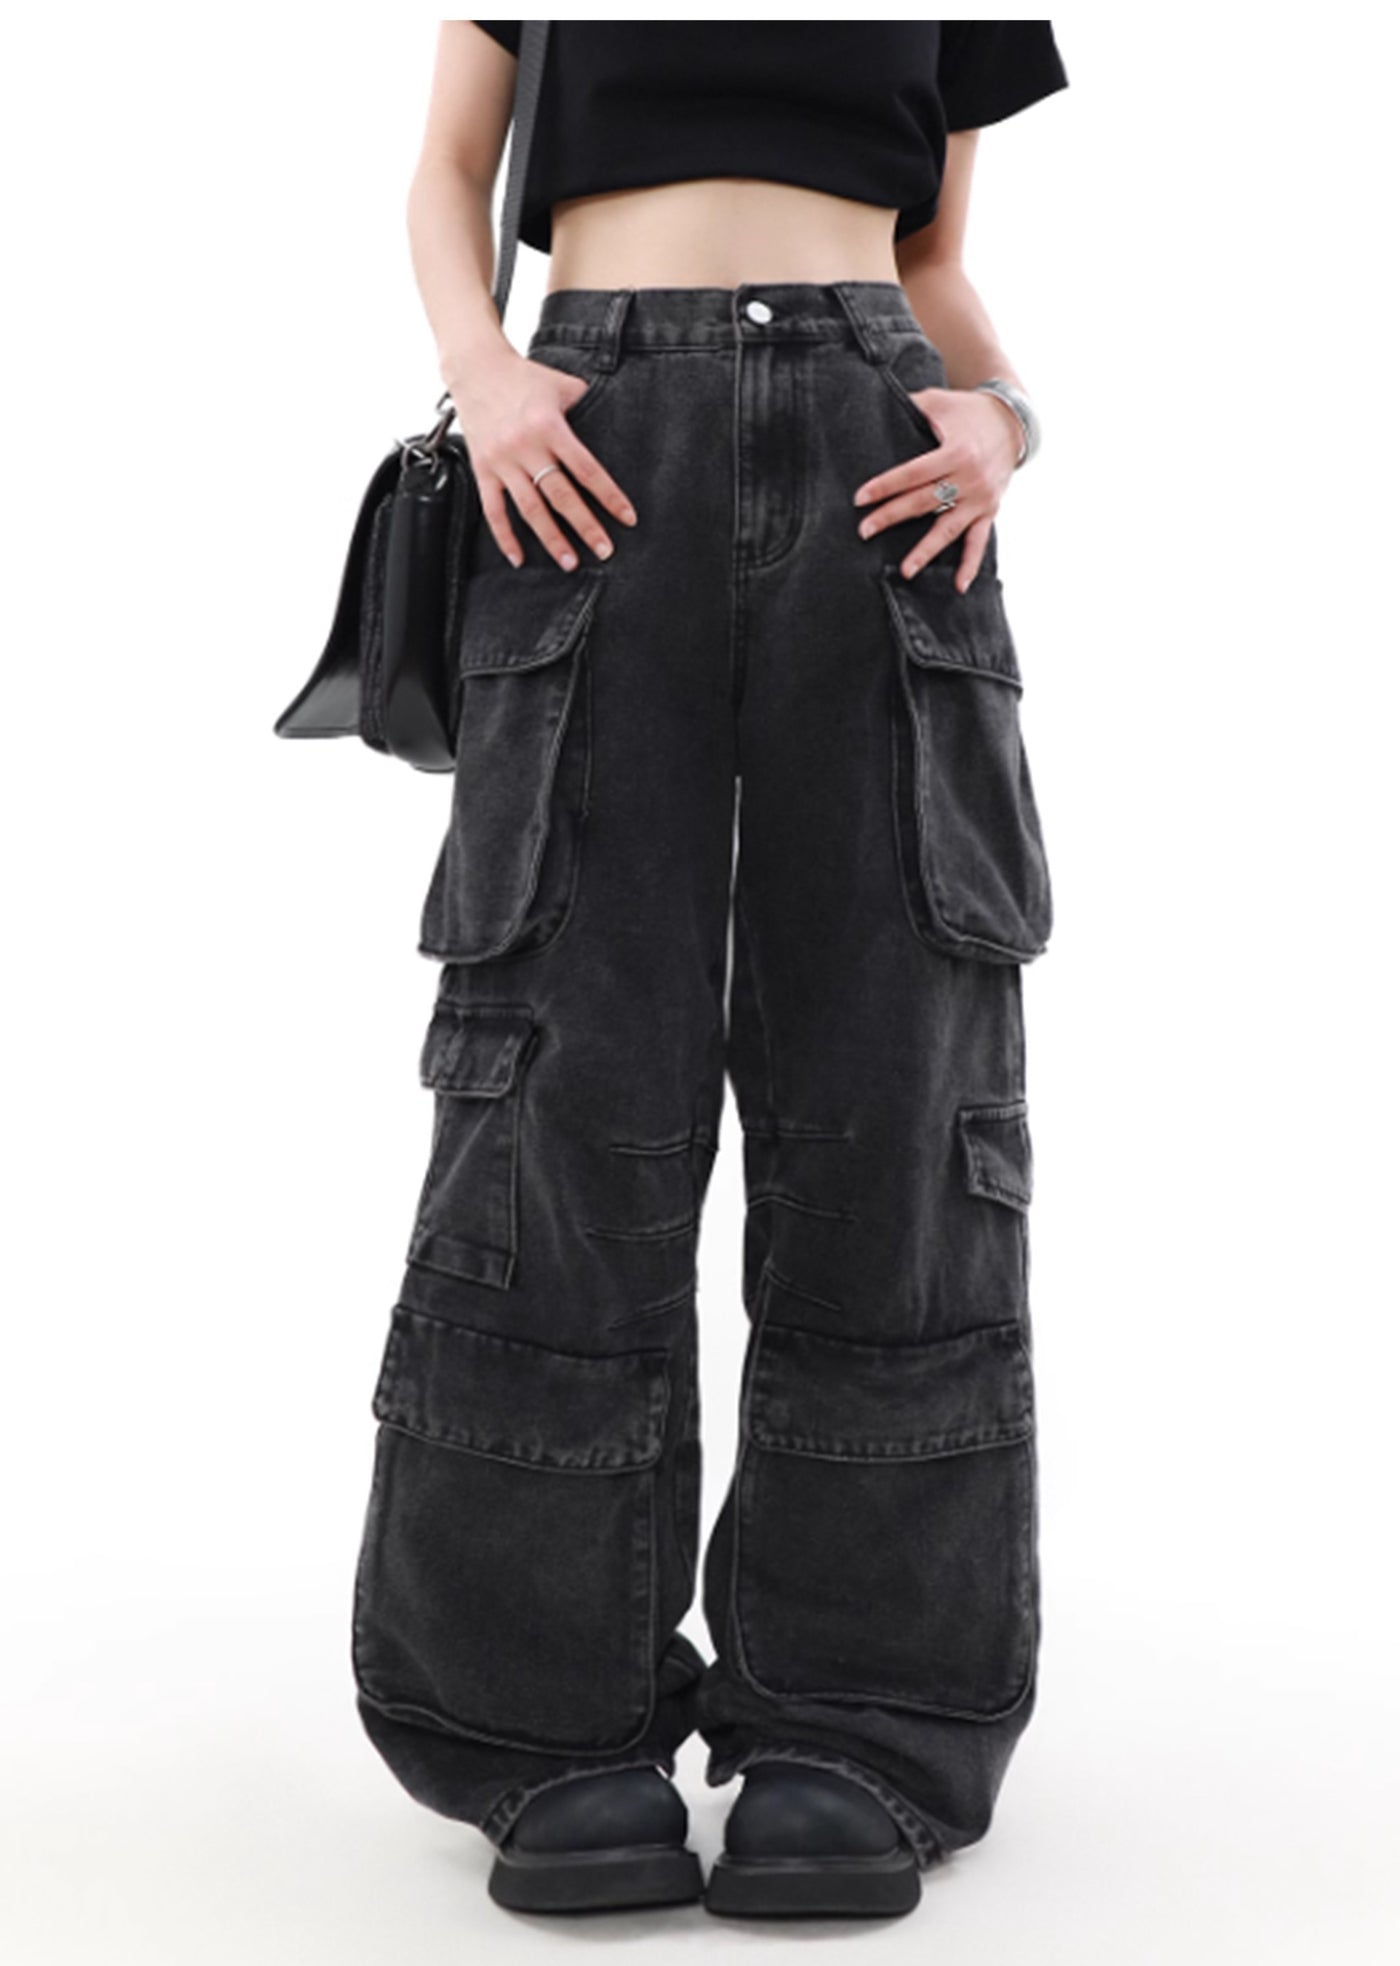 【MR nearly】Countless multi-pocket design cargo denim pants  MR0089